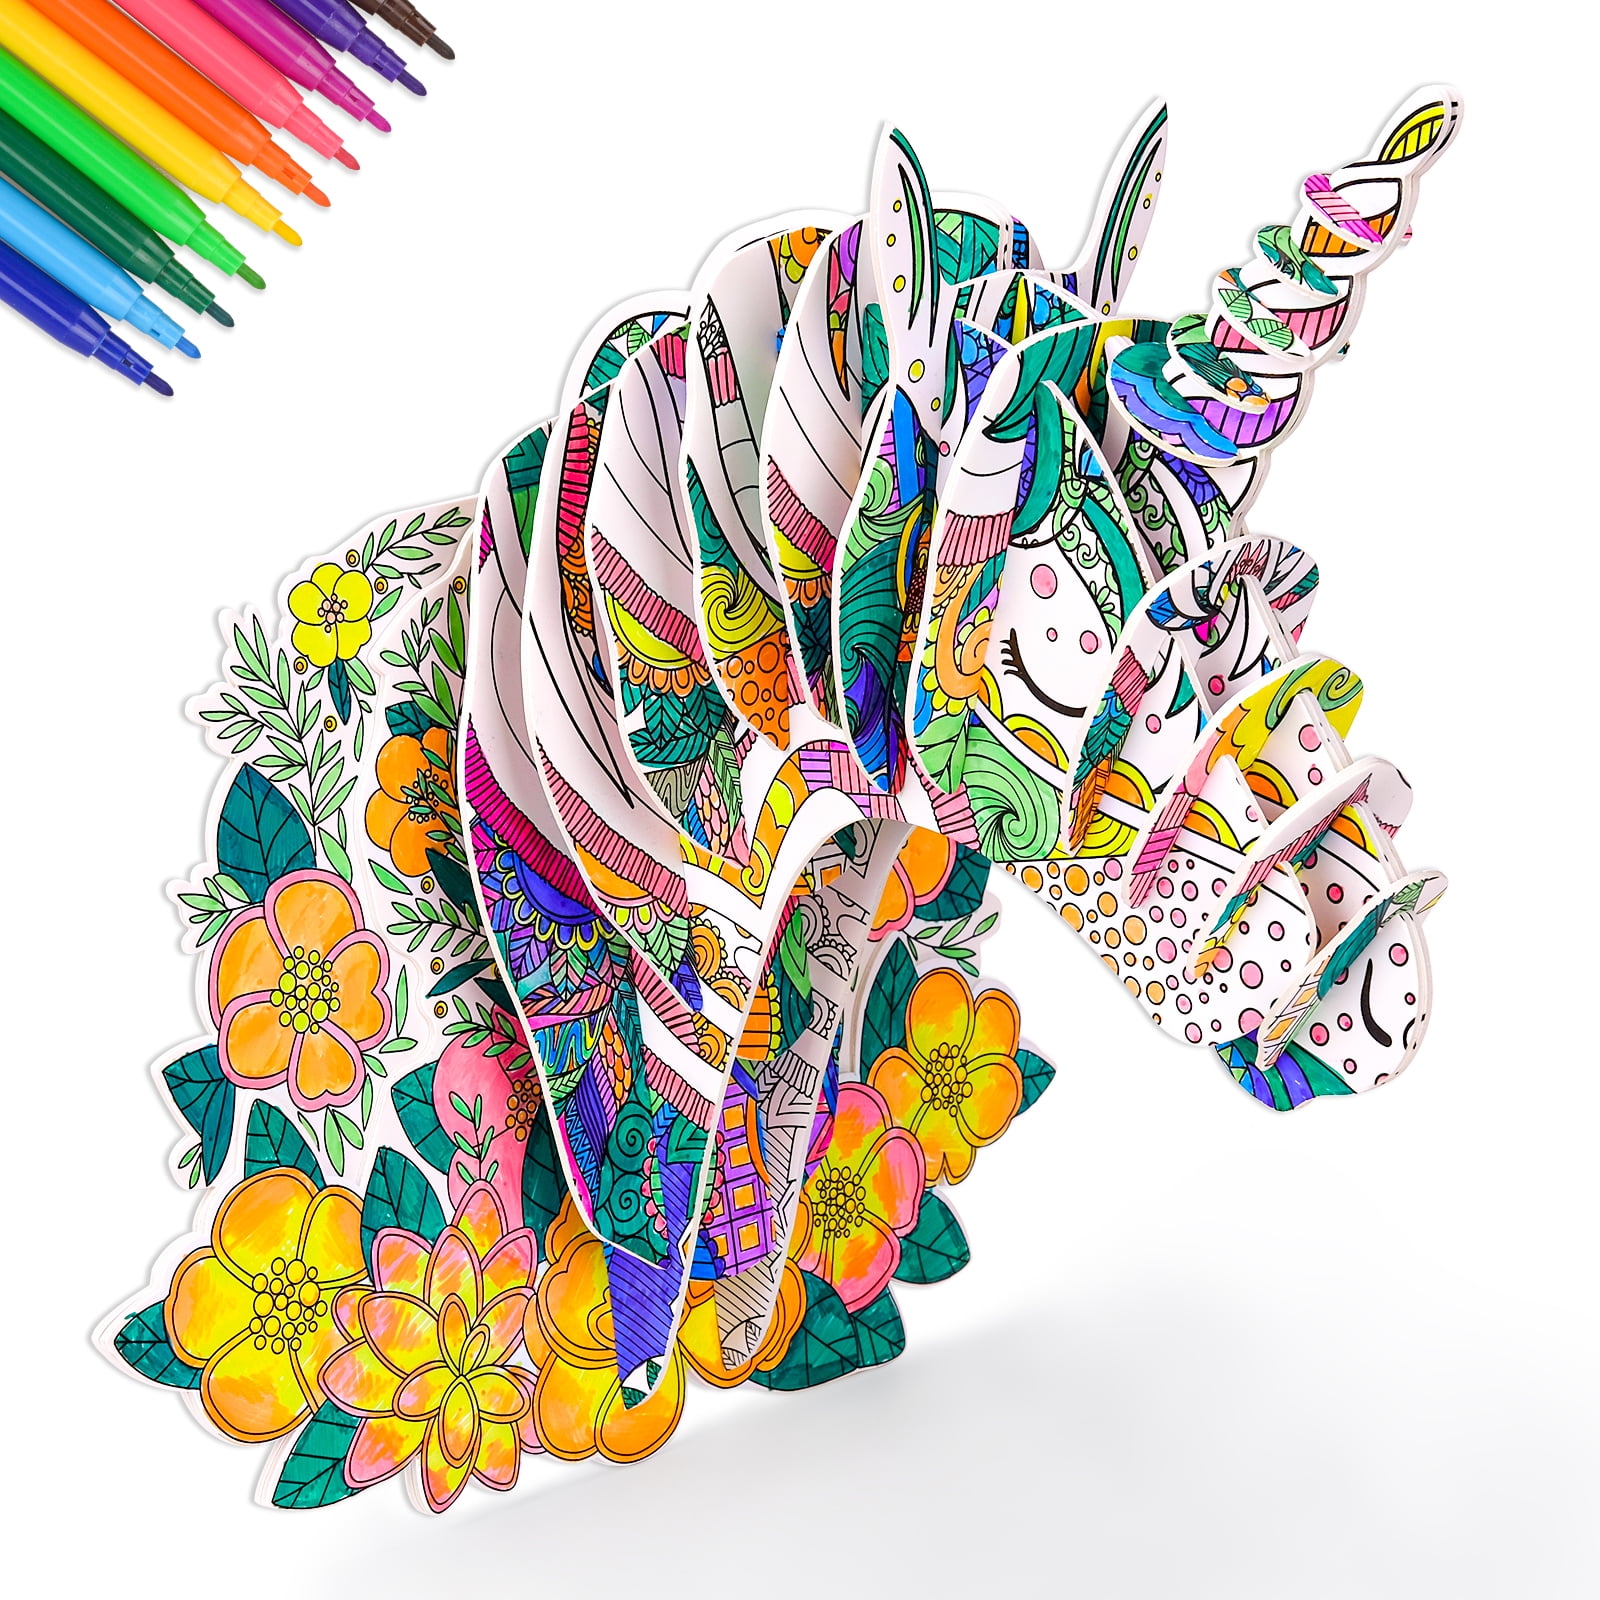 Arts Crafts for Kids Ages 6-8-12, 7 Sets Mandala 3D Coloring